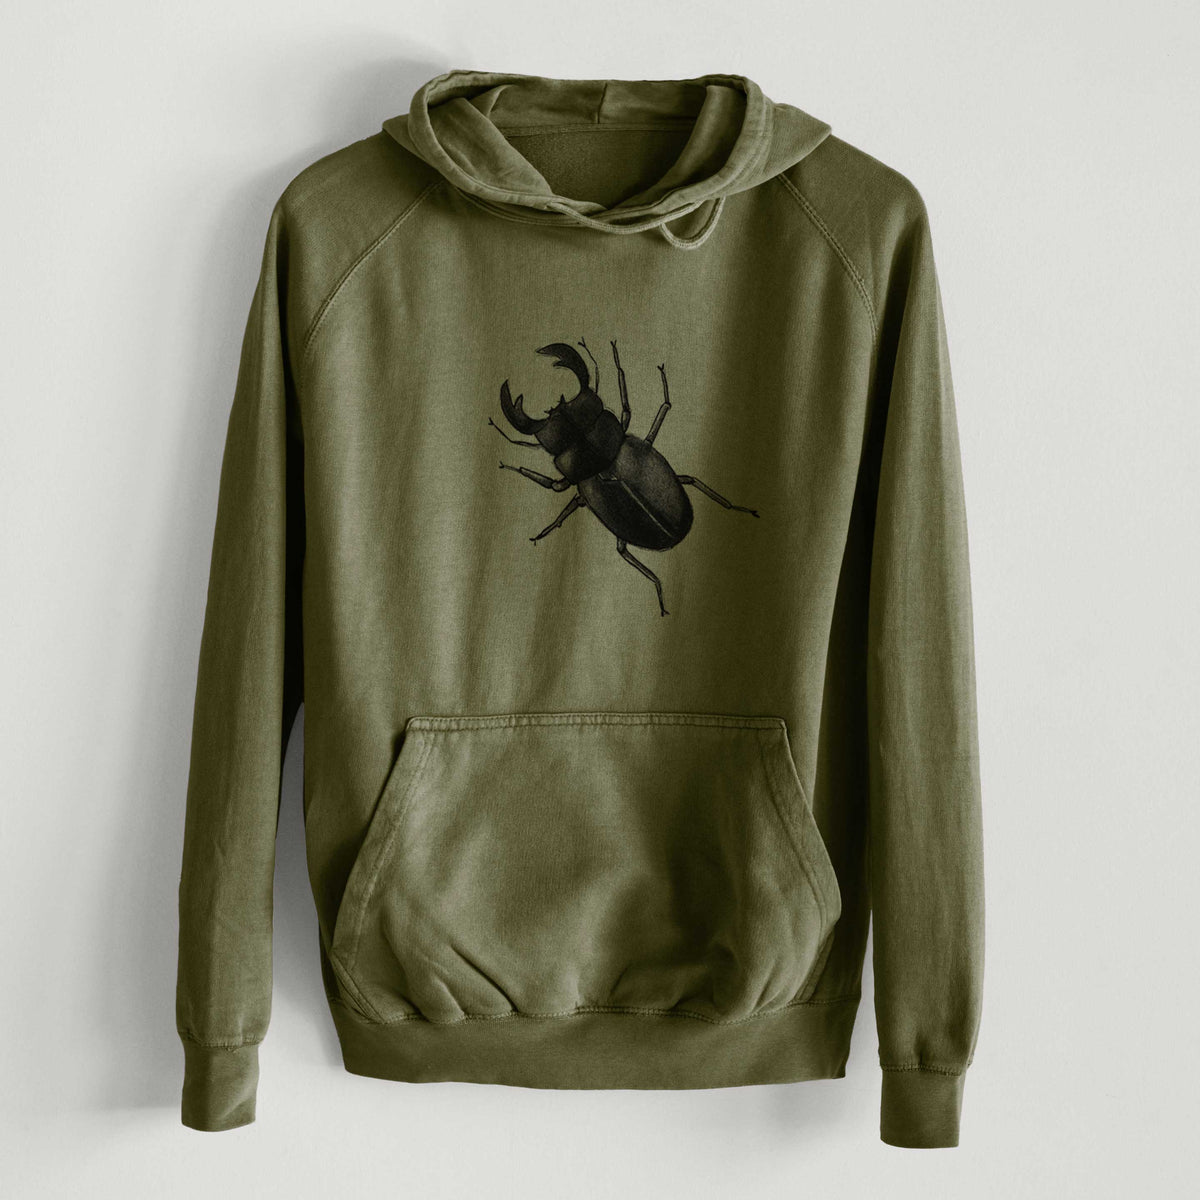 Dorcus titanus - Giant Stag Beetle  - Mid-Weight Unisex Vintage 100% Cotton Hoodie